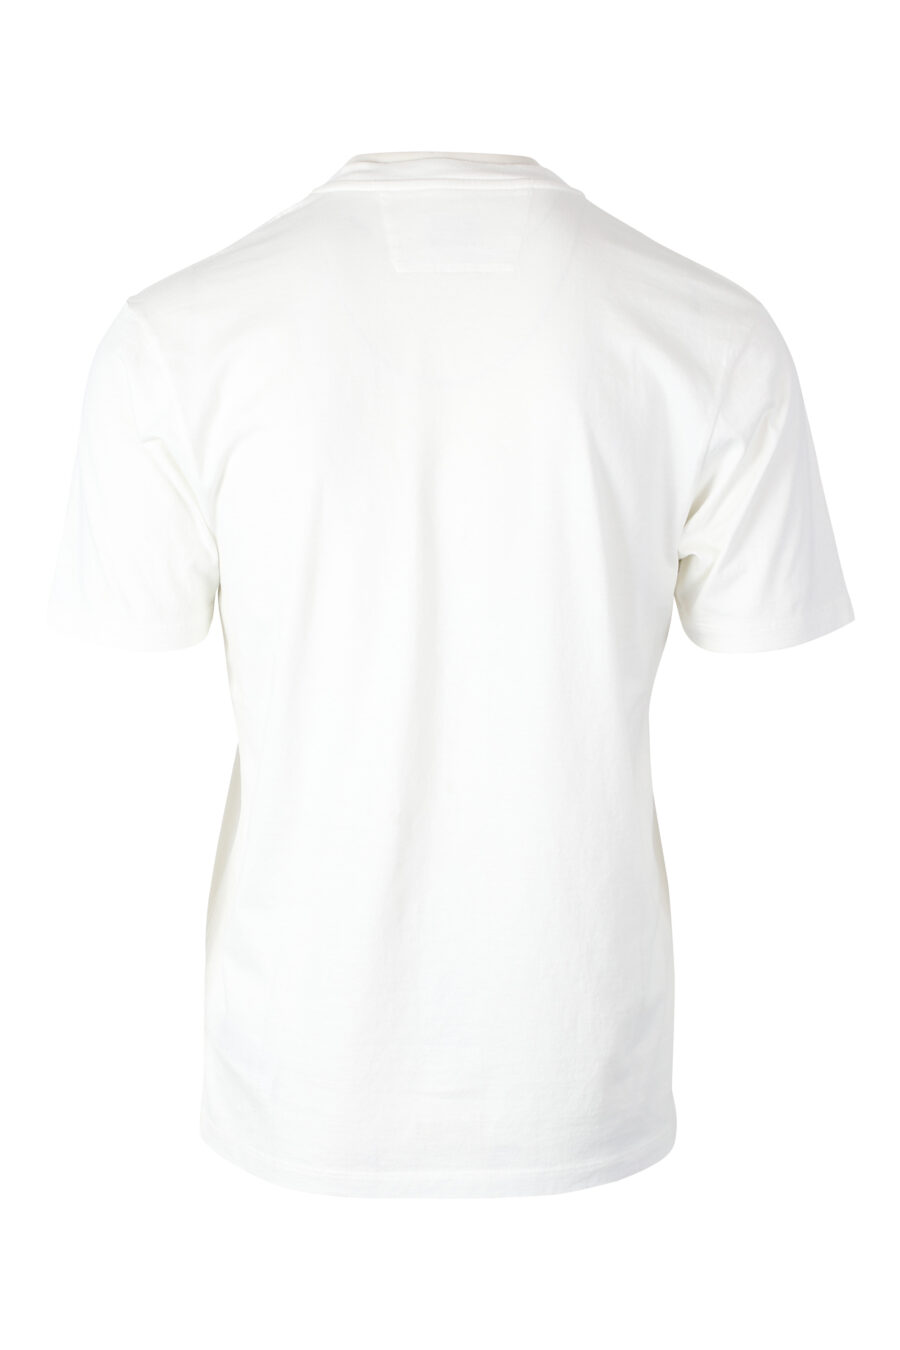 T-shirt branca com o logótipo "spray" - IMG 2378